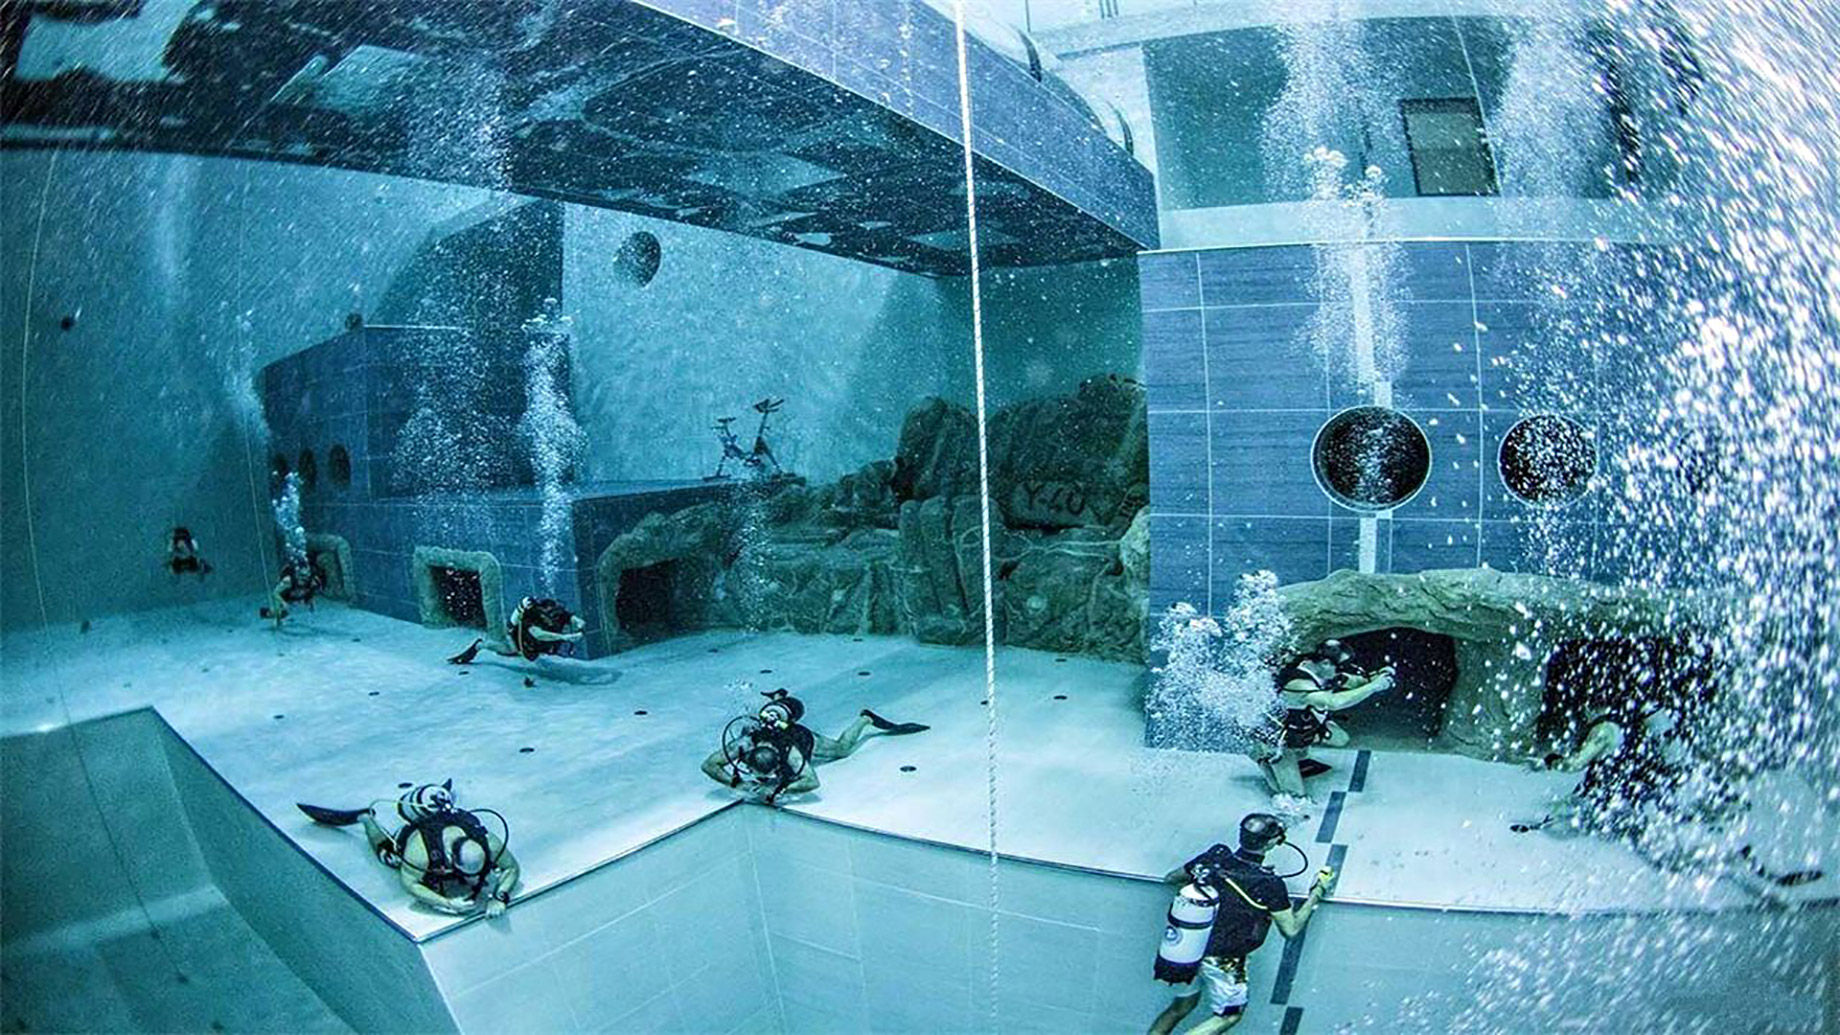 Emanuele Boaretto – Deepest Swimming Pool – Italy